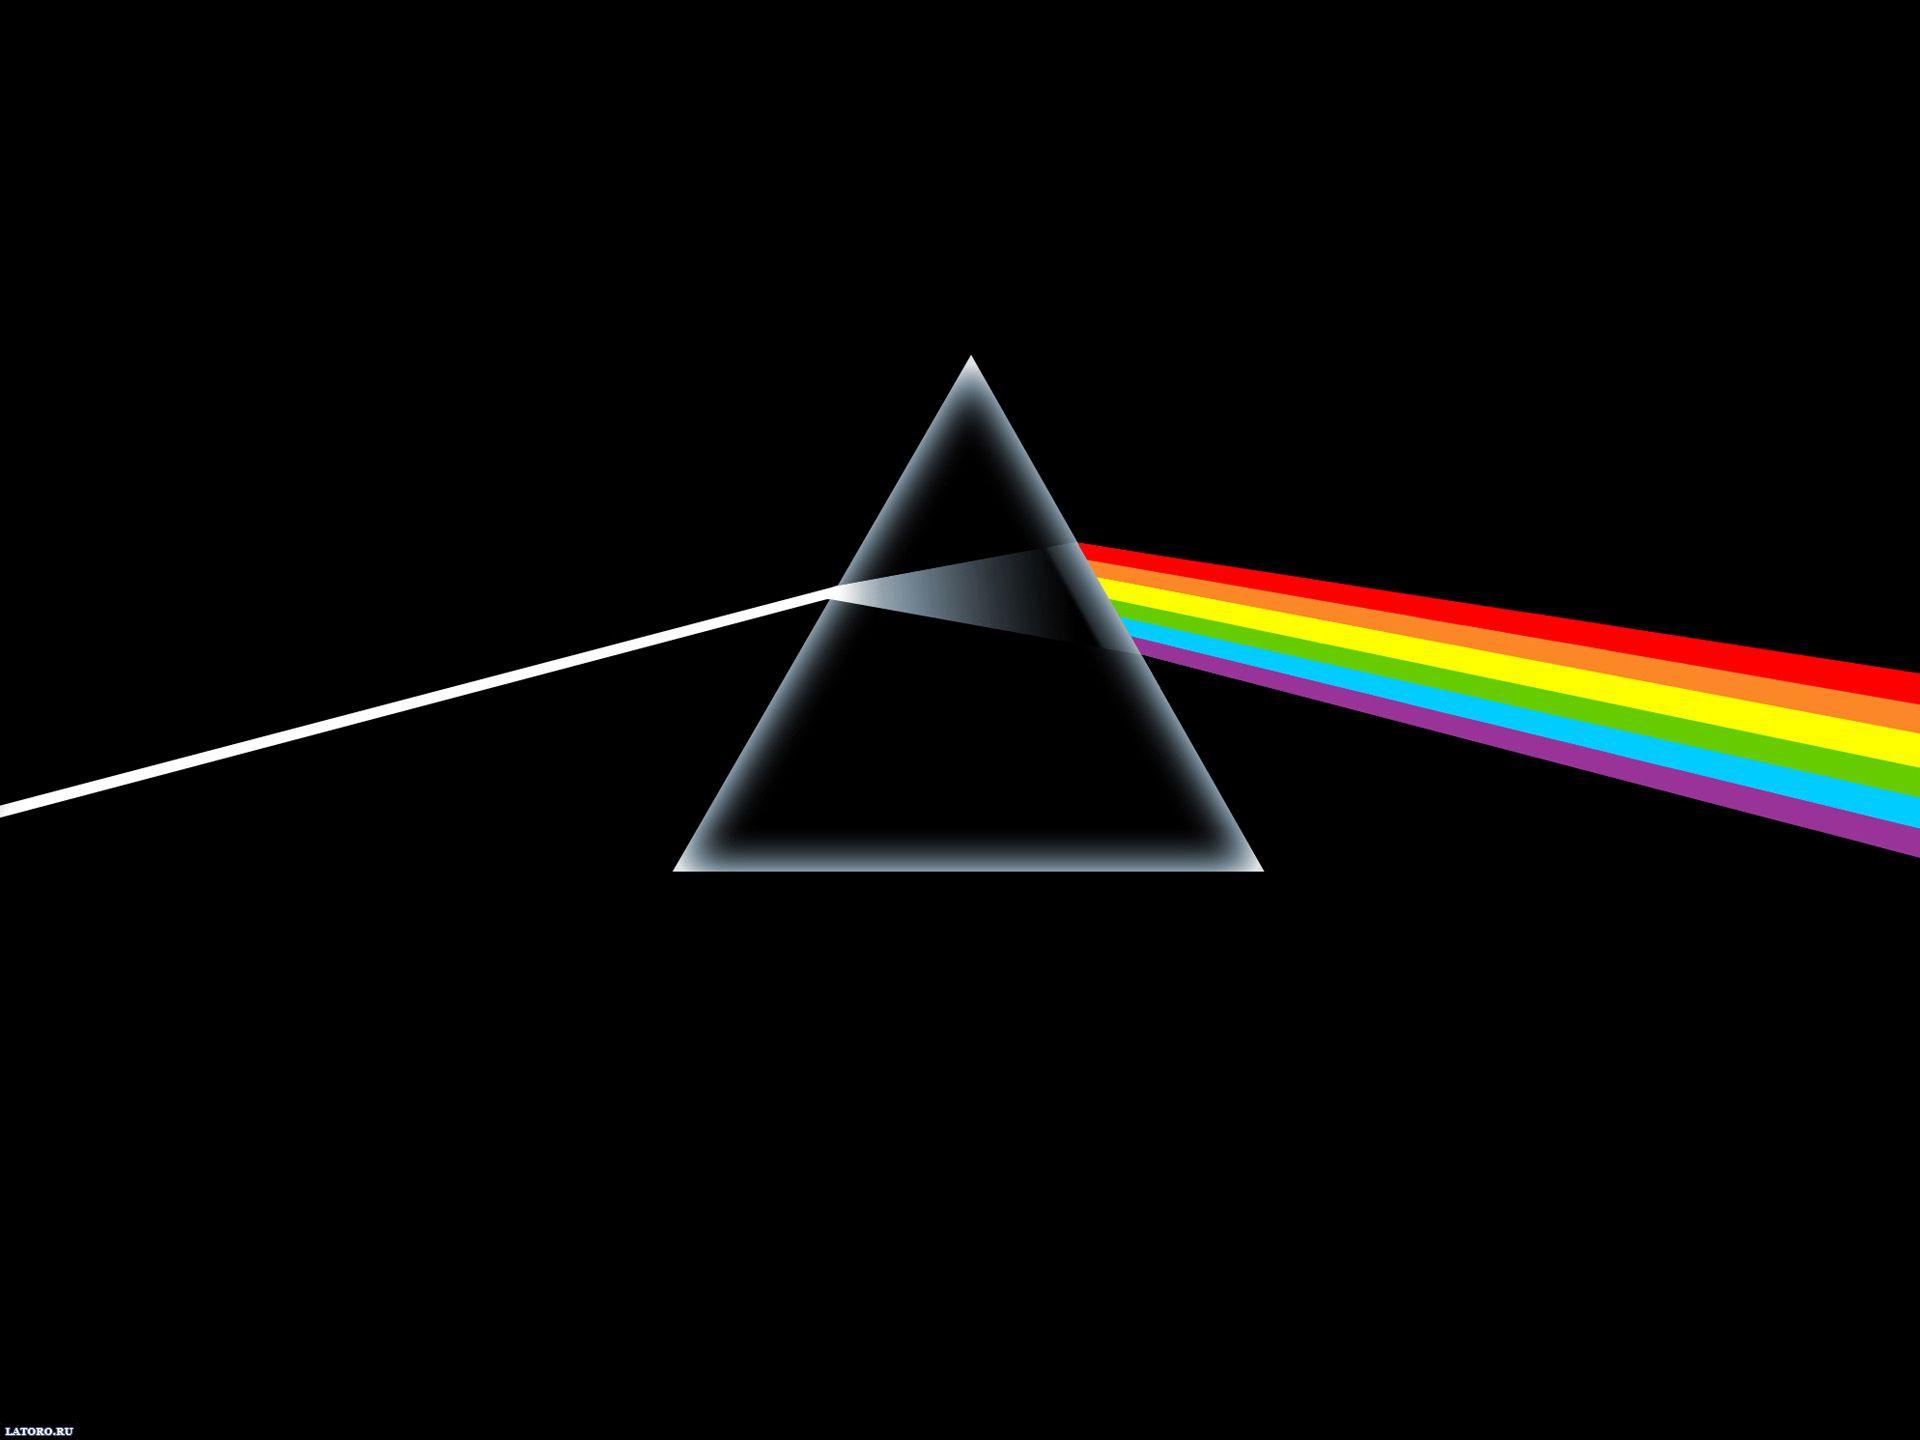 Free Pink Floyd Wallpaper